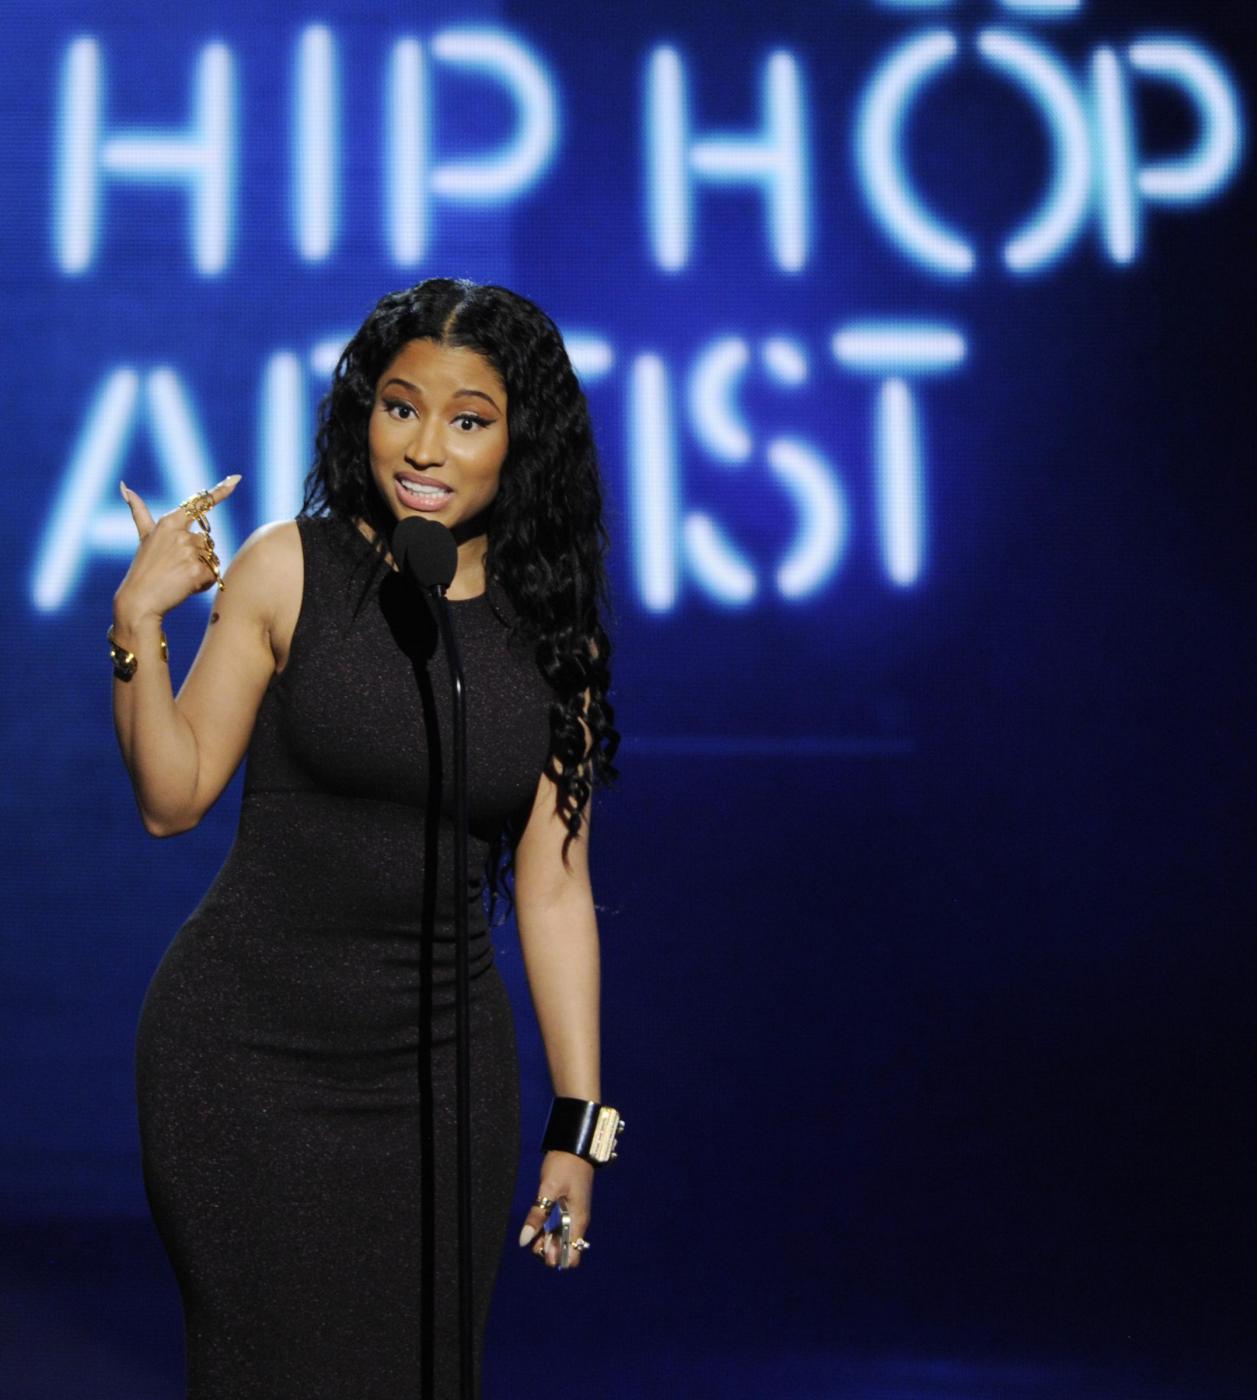 BET Awards 2014, la rapper Nicki Minaj rivela: "Stavo per morire" (foto)